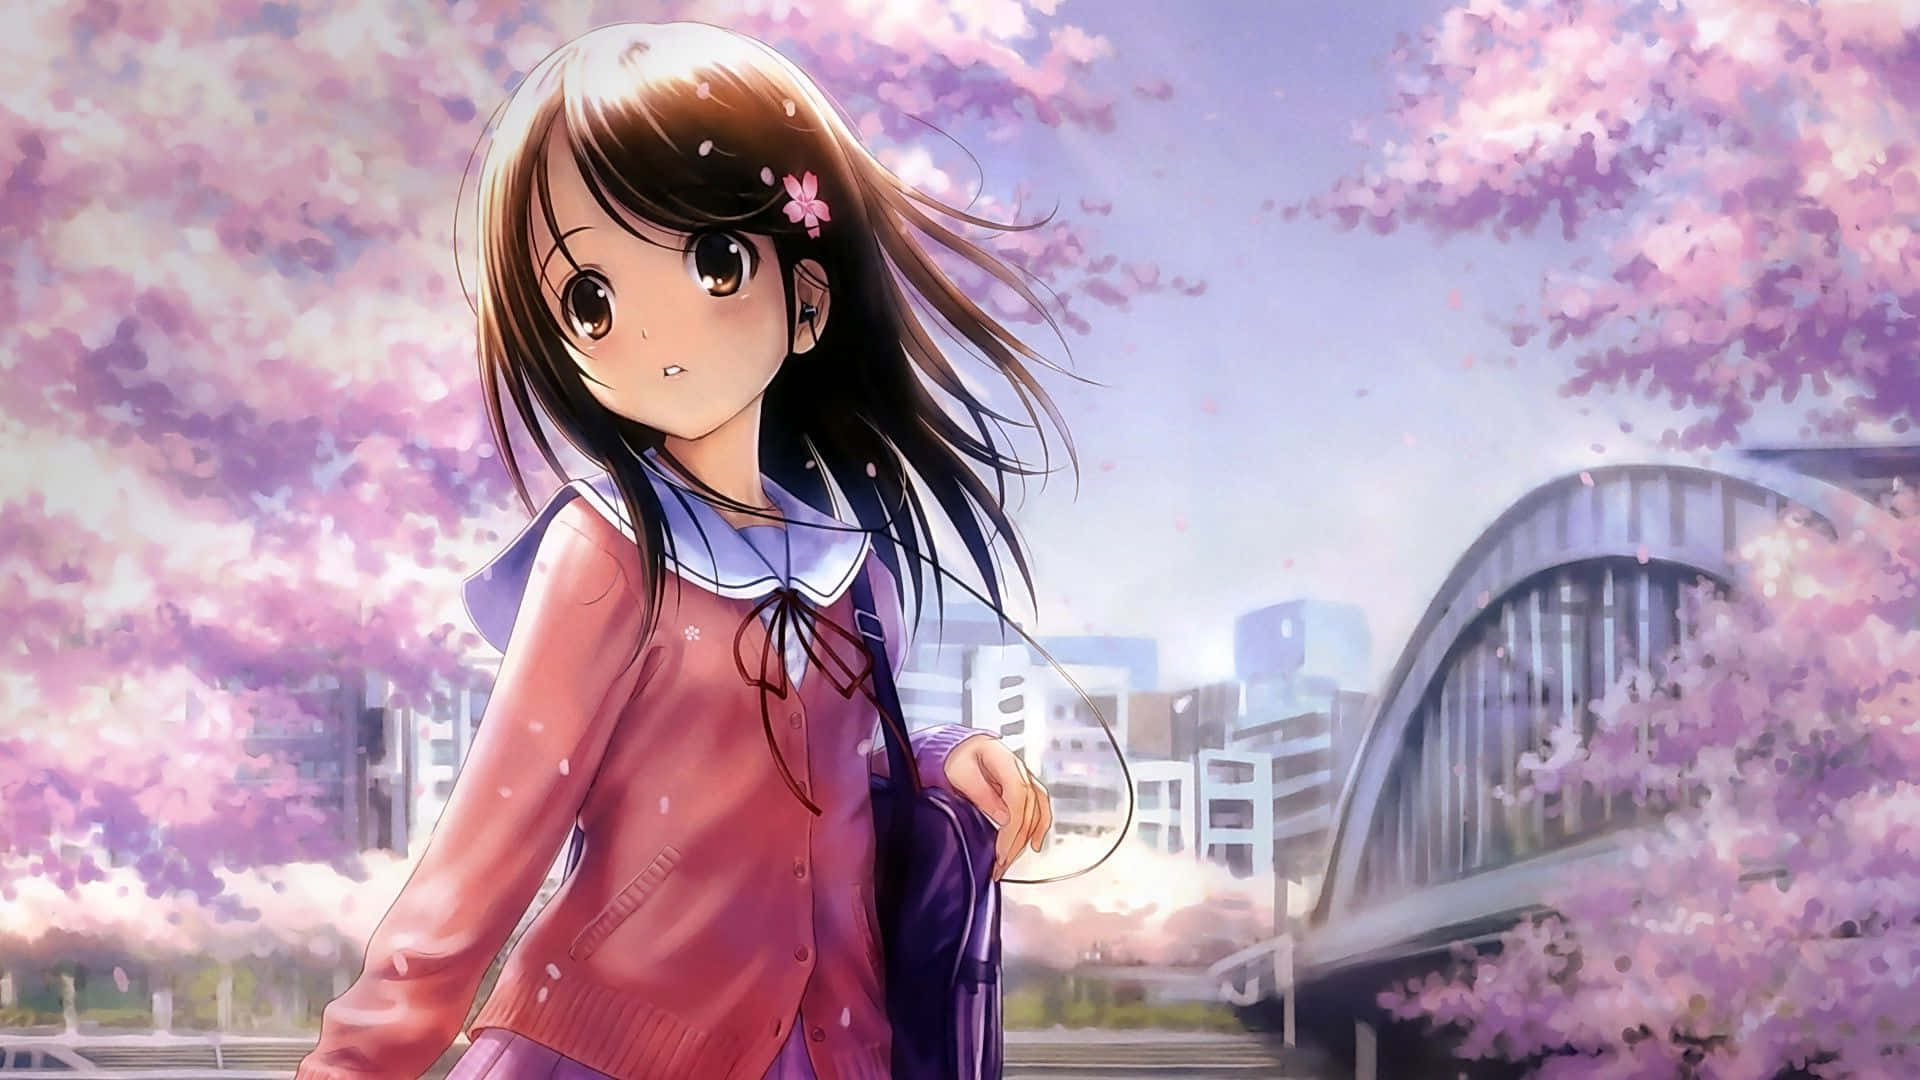 Chicade Anime Con Vestido Rosa Caminando Entre Los Cerezos En Flor Fondo de pantalla